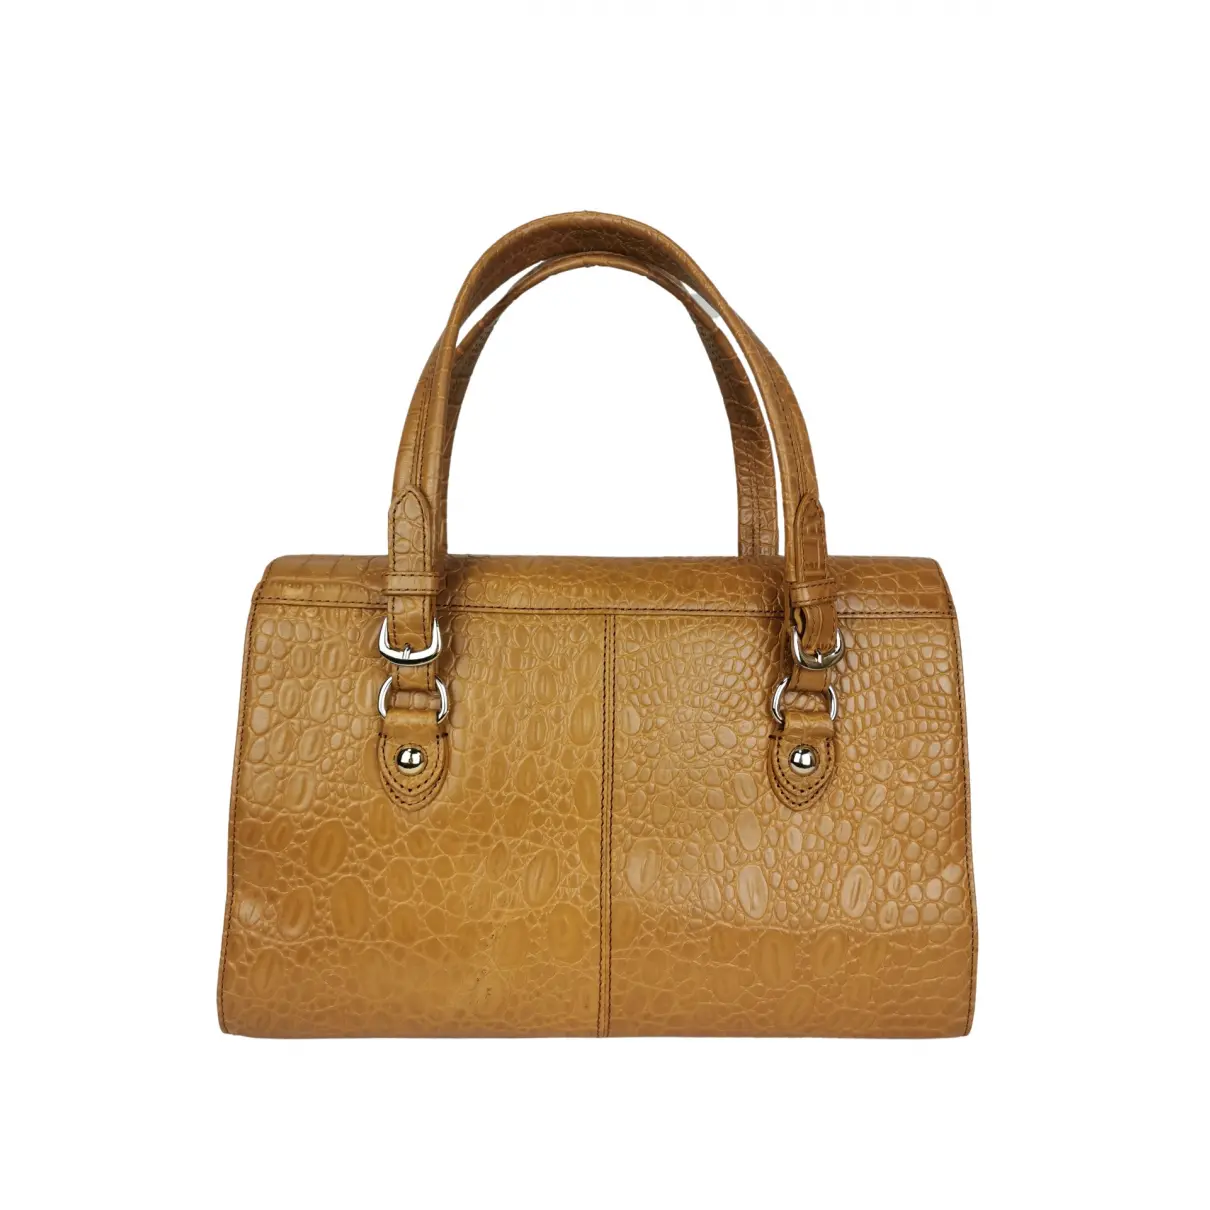 Buy Dkny Leather handbag online